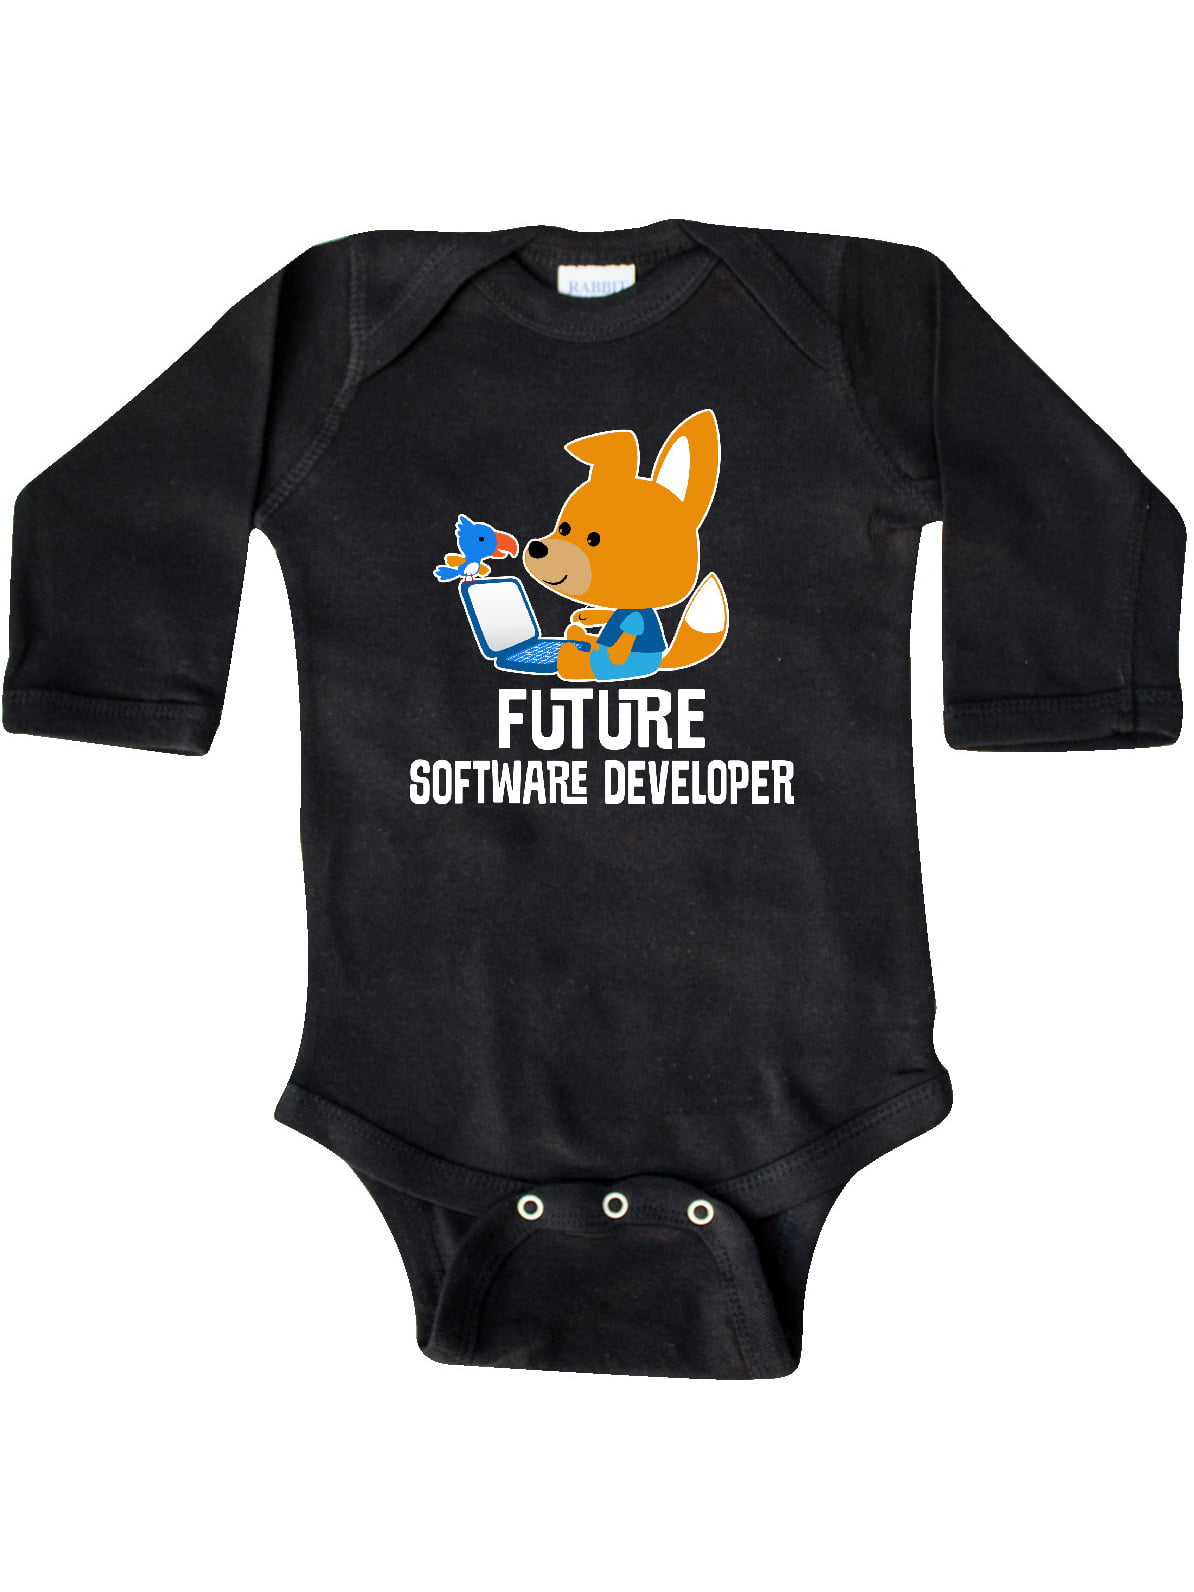 Baby Boy Bodysuits Walking Bigfoot Silhouette-1 Infant Long Sleeve Romper Jumpsuit